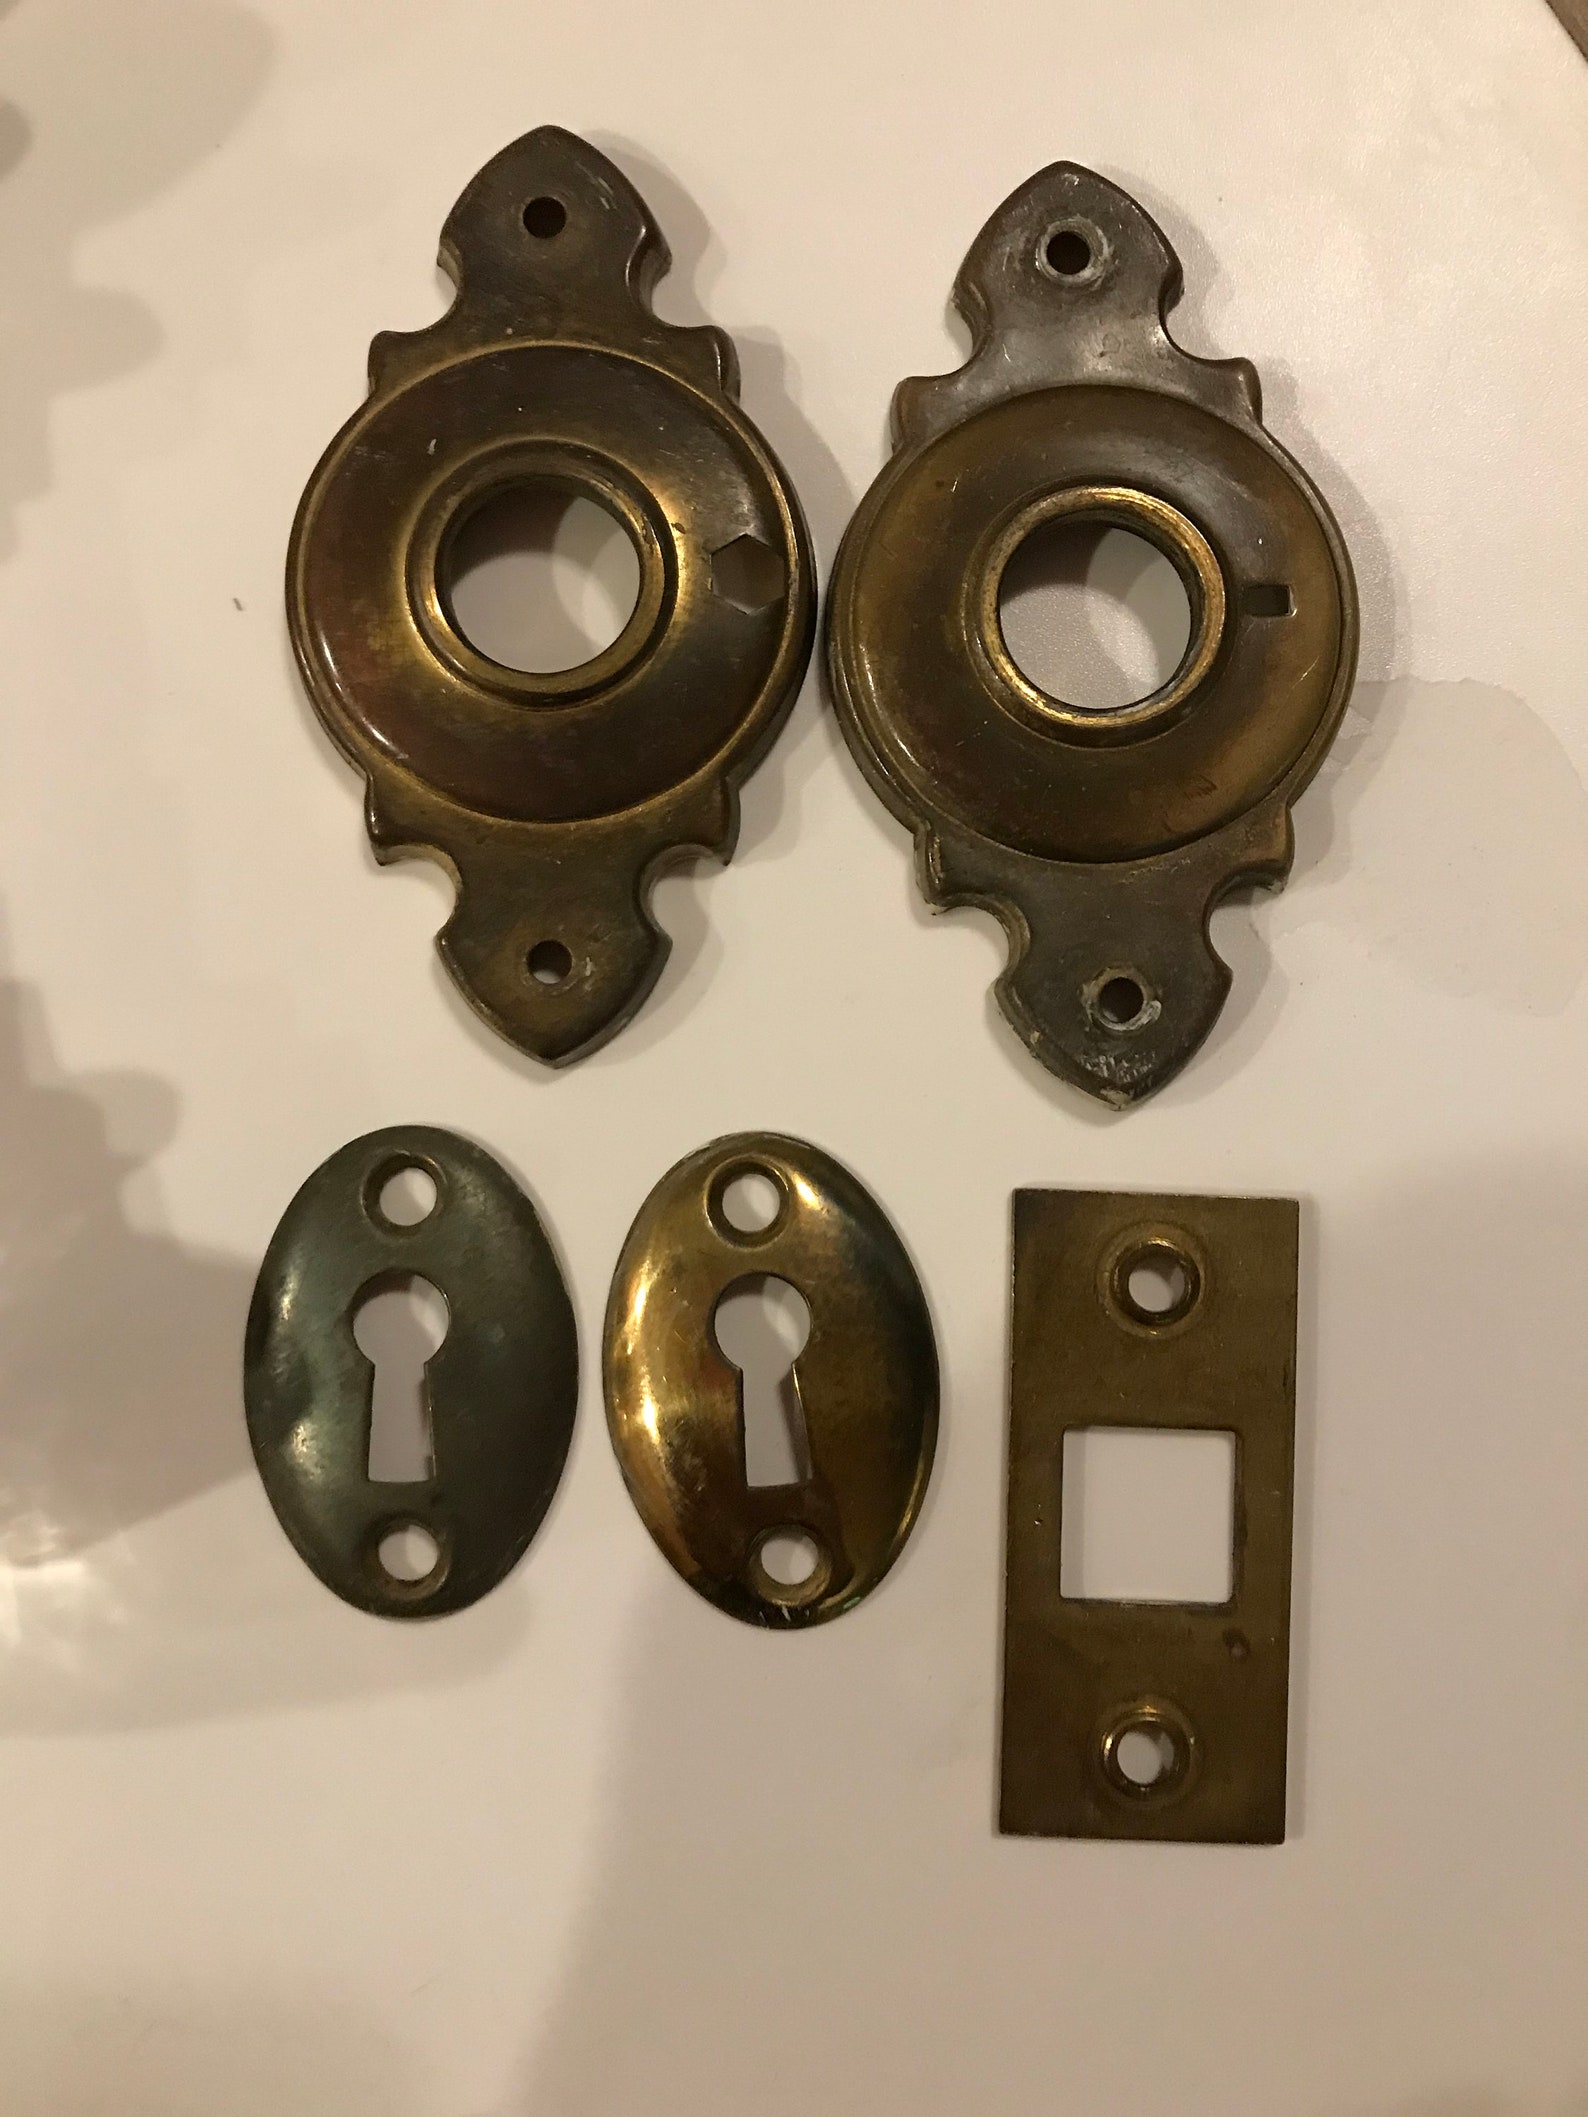 Vintage mortise lock knob plates key hole covers strike | Etsy